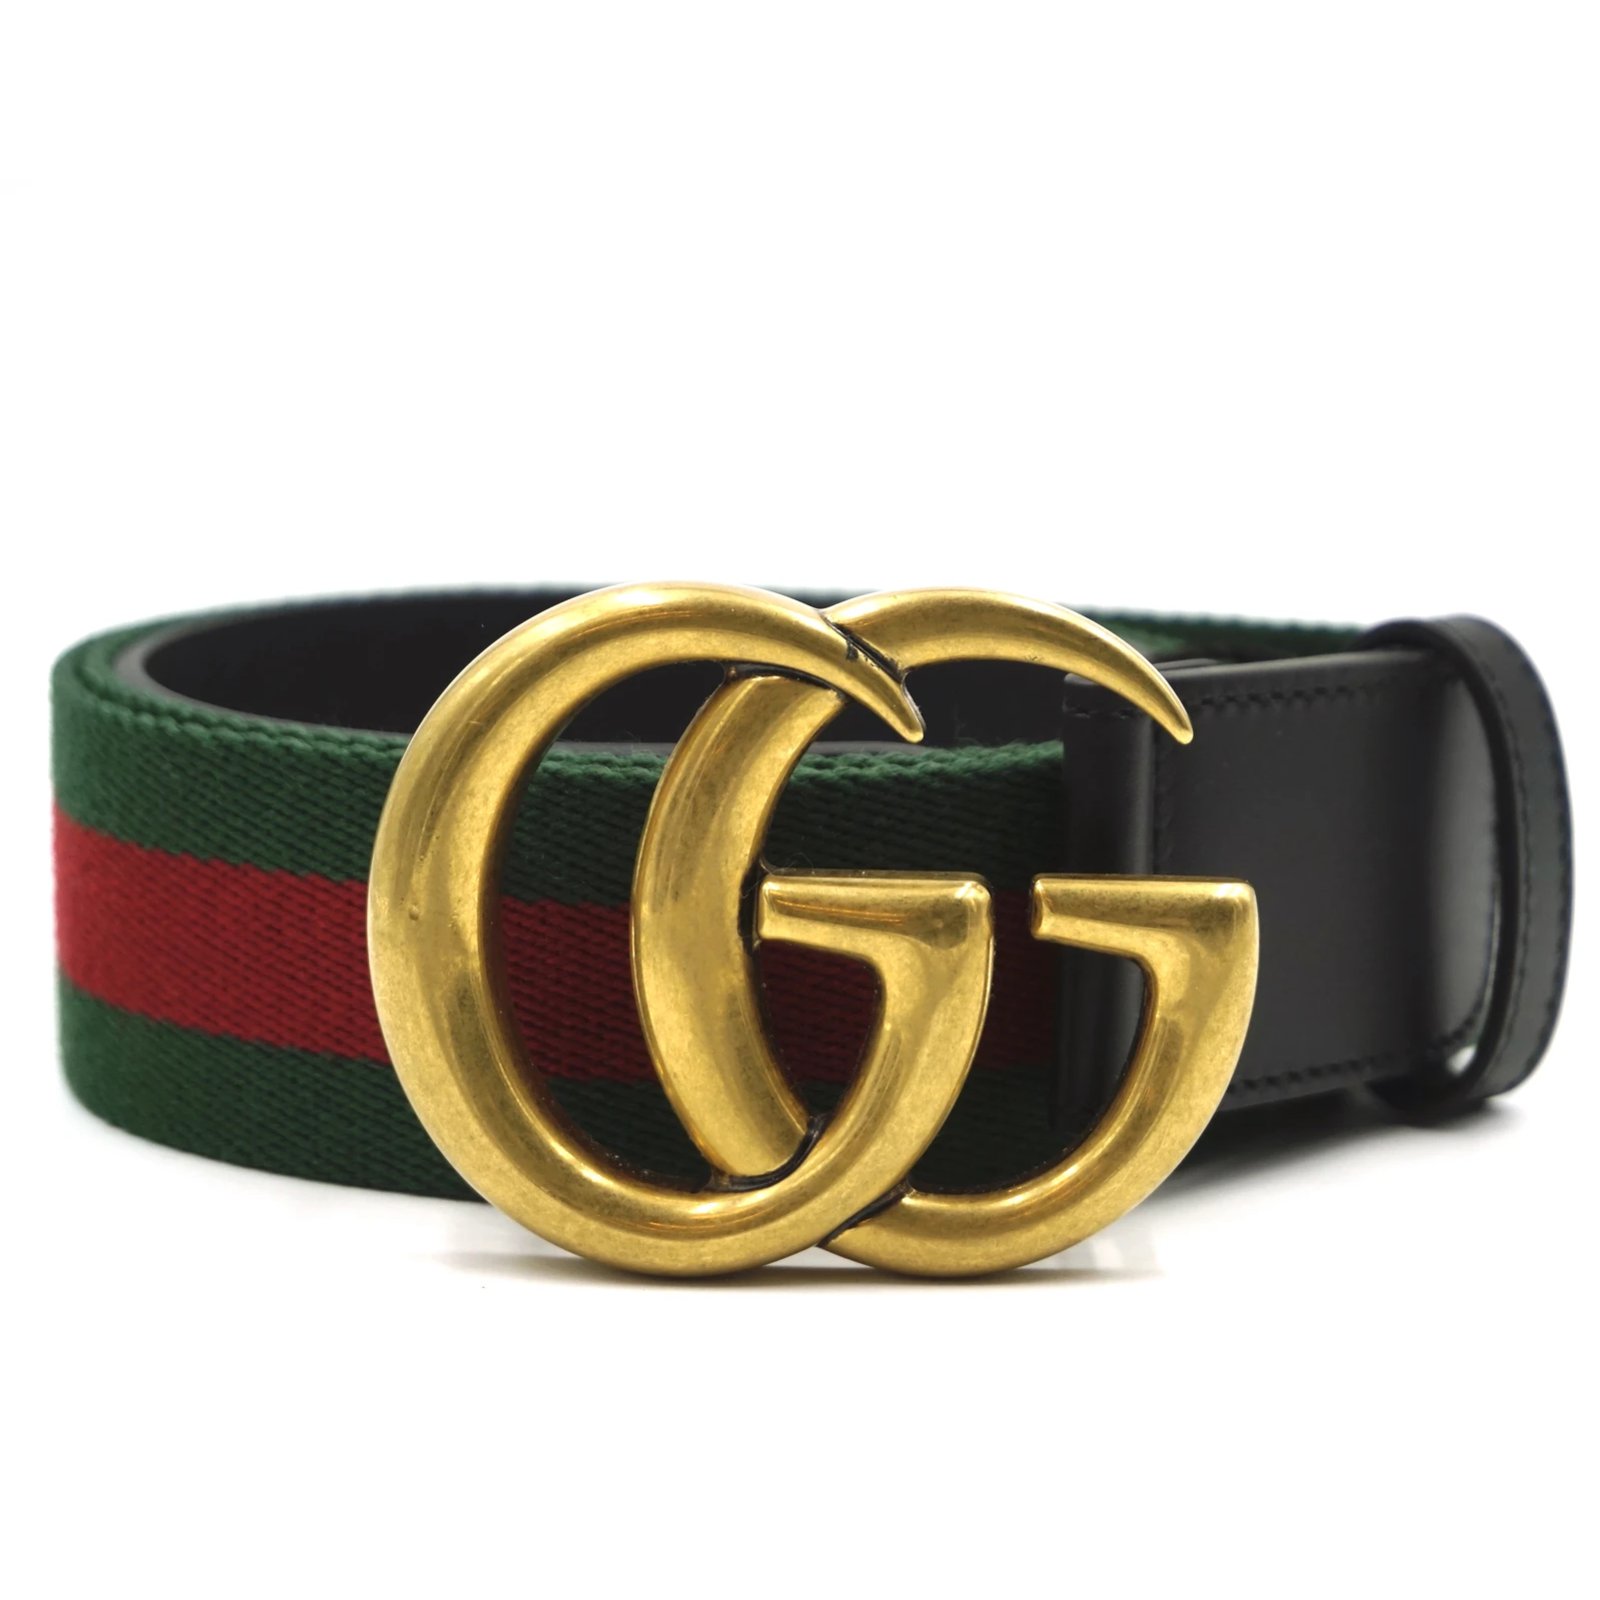 price of original gucci belt